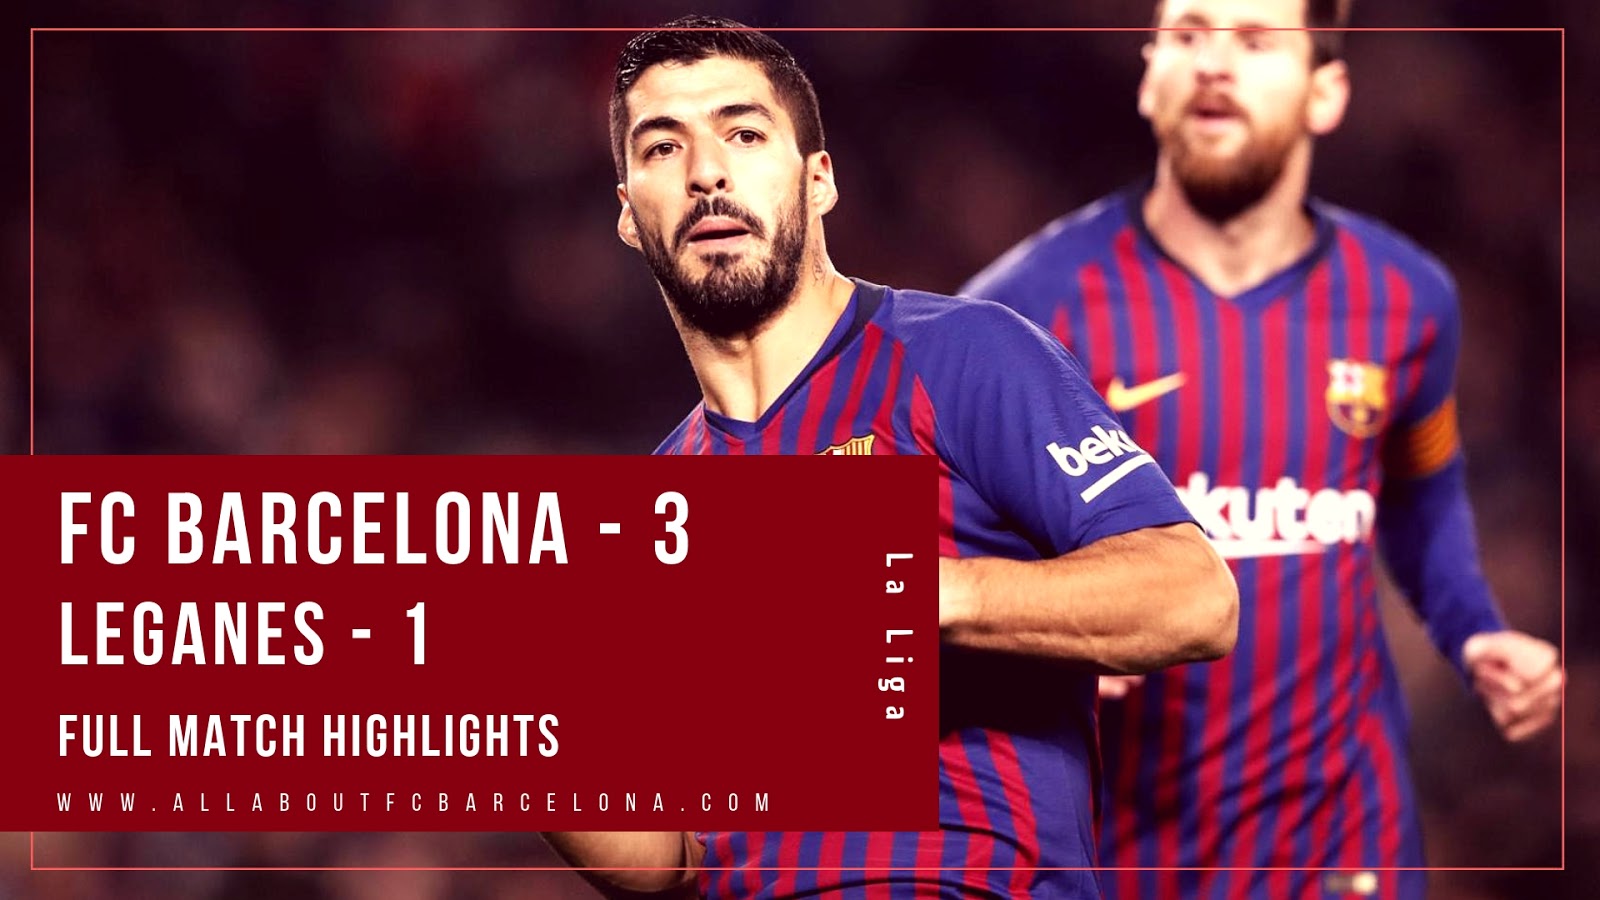 FC Barcelona vs Leganes Match Highlights - FC Barcelona - 3, Leganes - 1